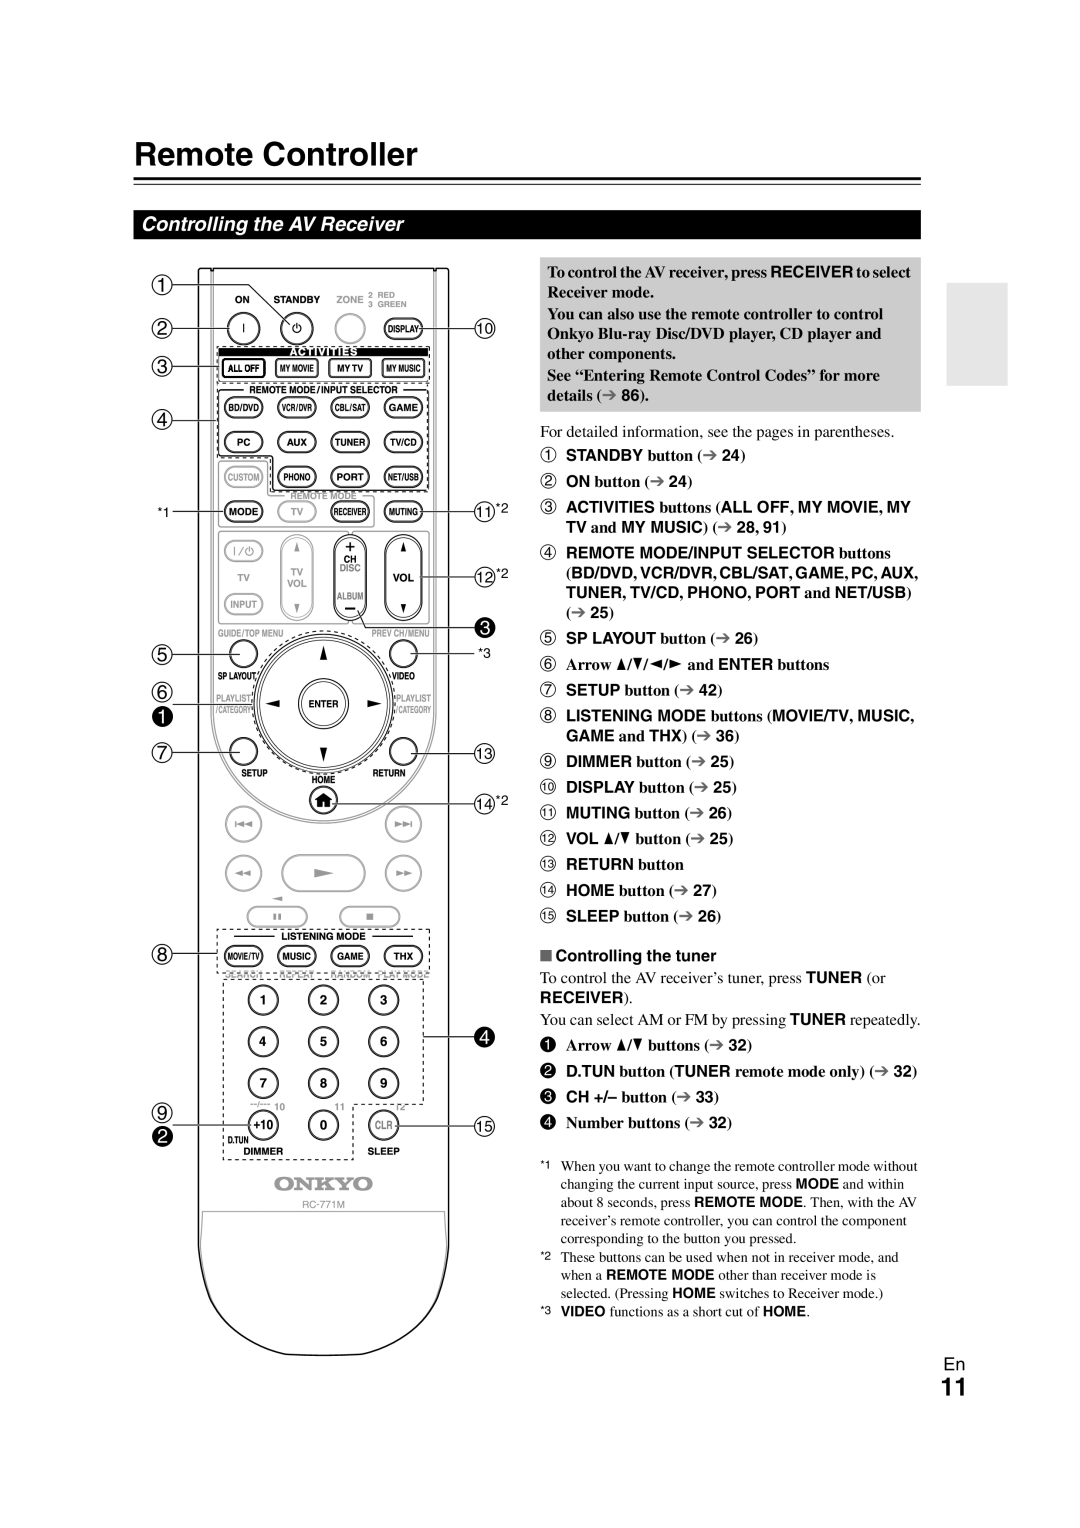 Onkyo TX-NR1008 Remote Controller, a bj c d, f a gm, h d i bo, Controlling the AV Receiver, aSTANDBY button 